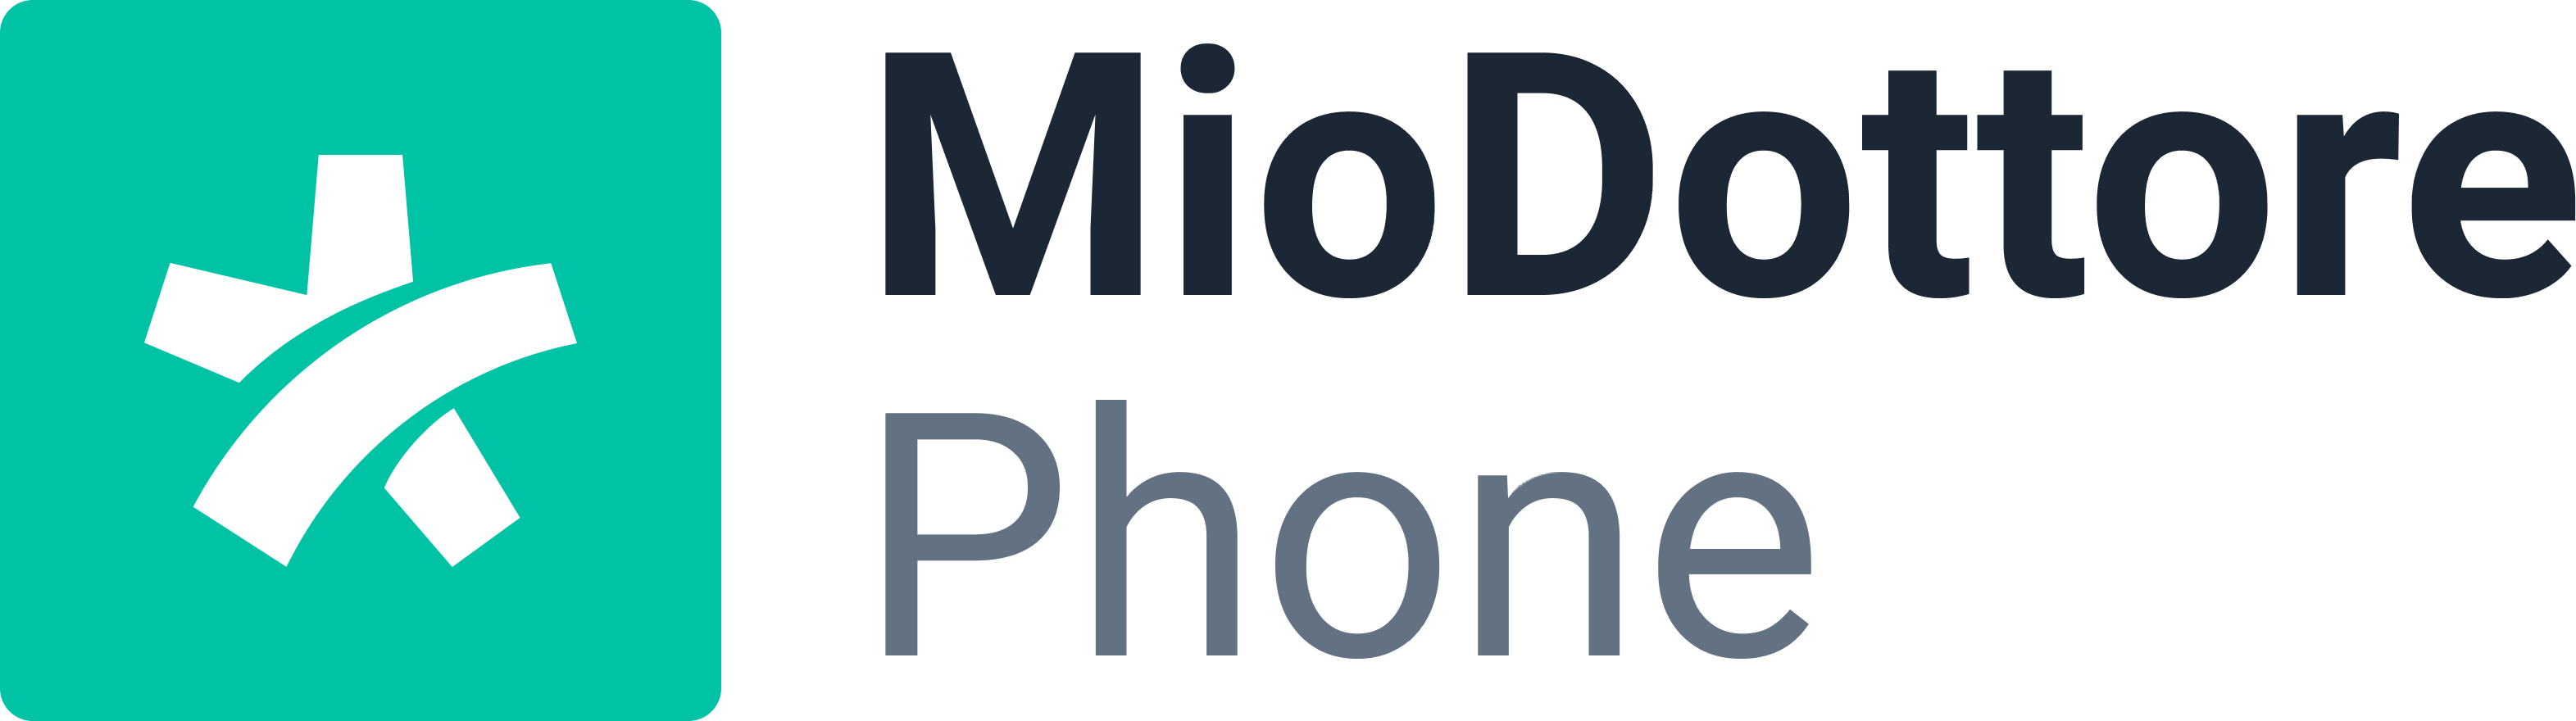 miodottore-phone-logo-primary (1)